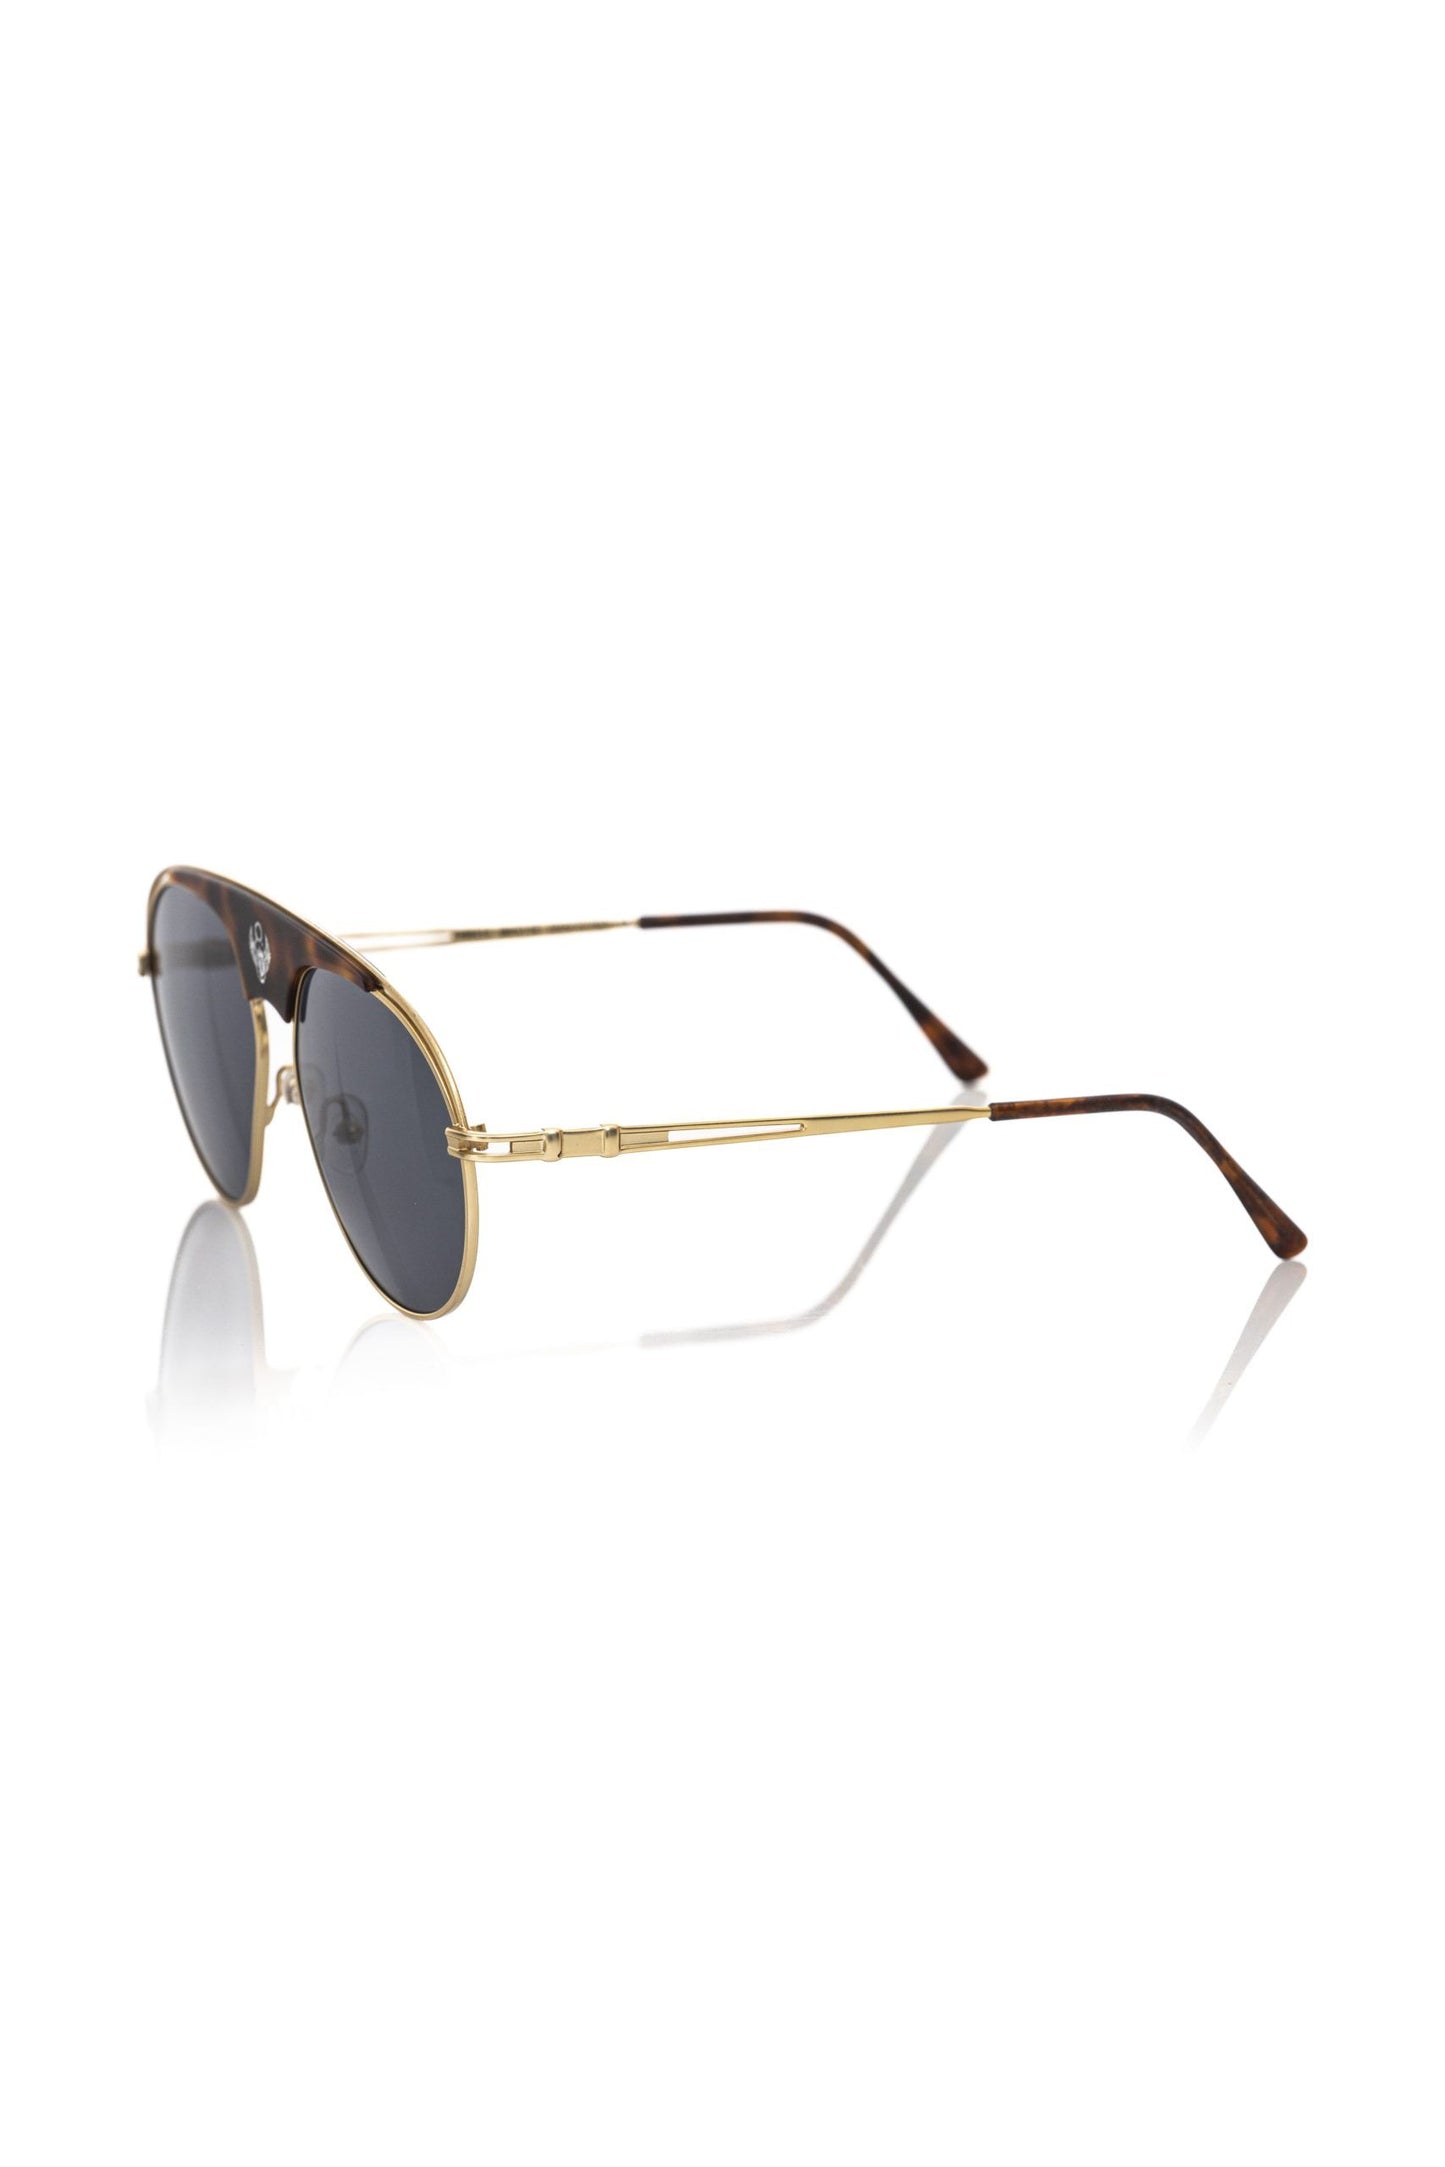 Frankie Morello FRMO-22126 Brown Metallic Fibre Sunglasses